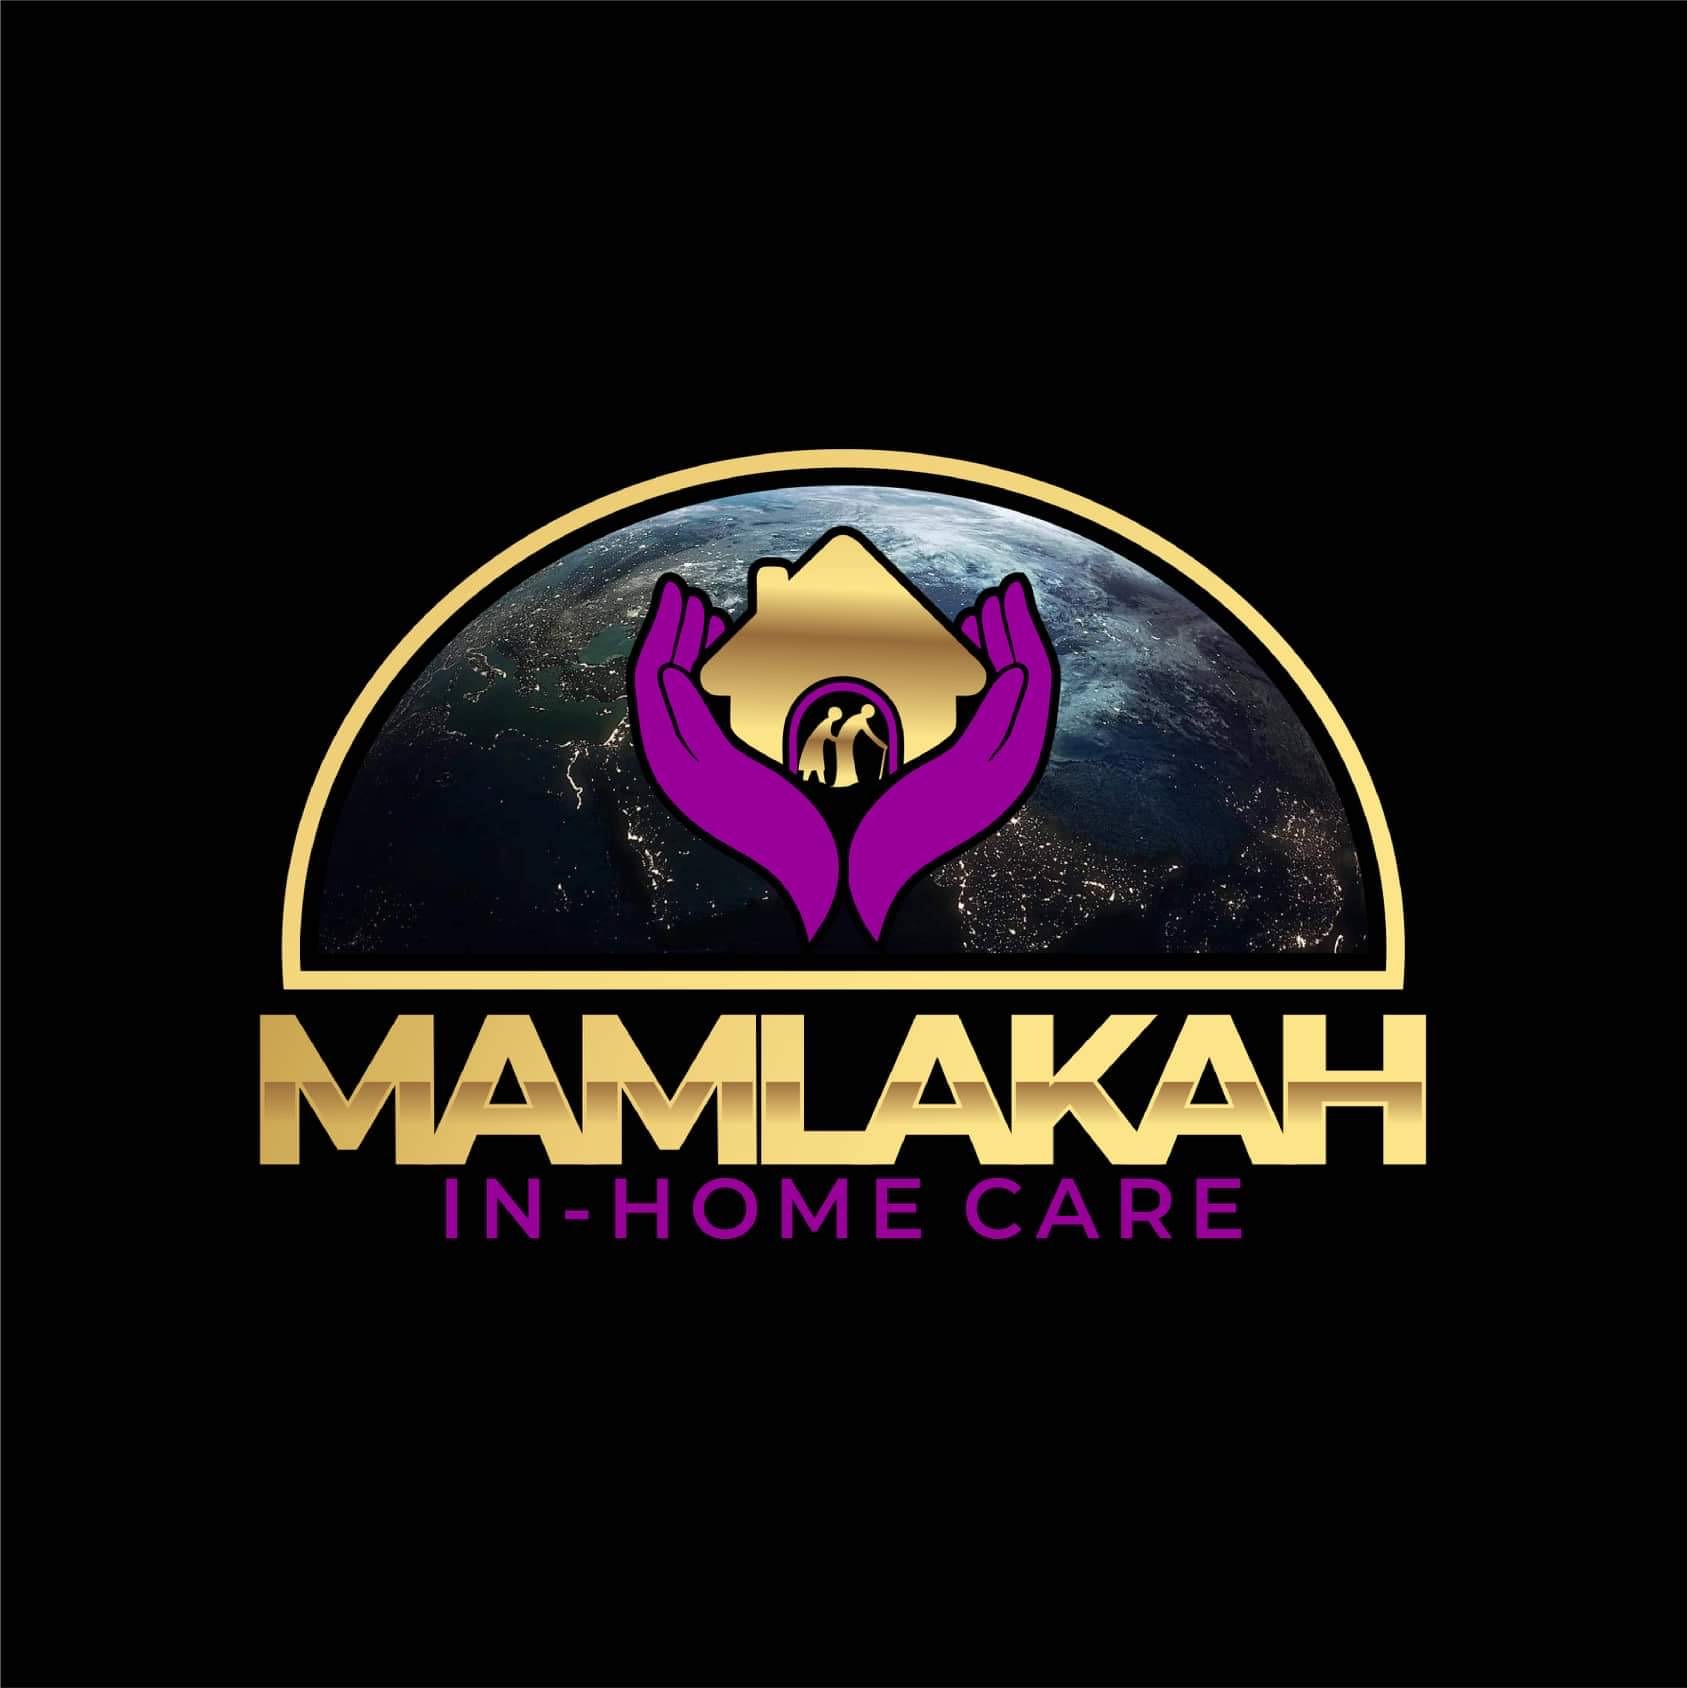 Mamlakah In-Home Care